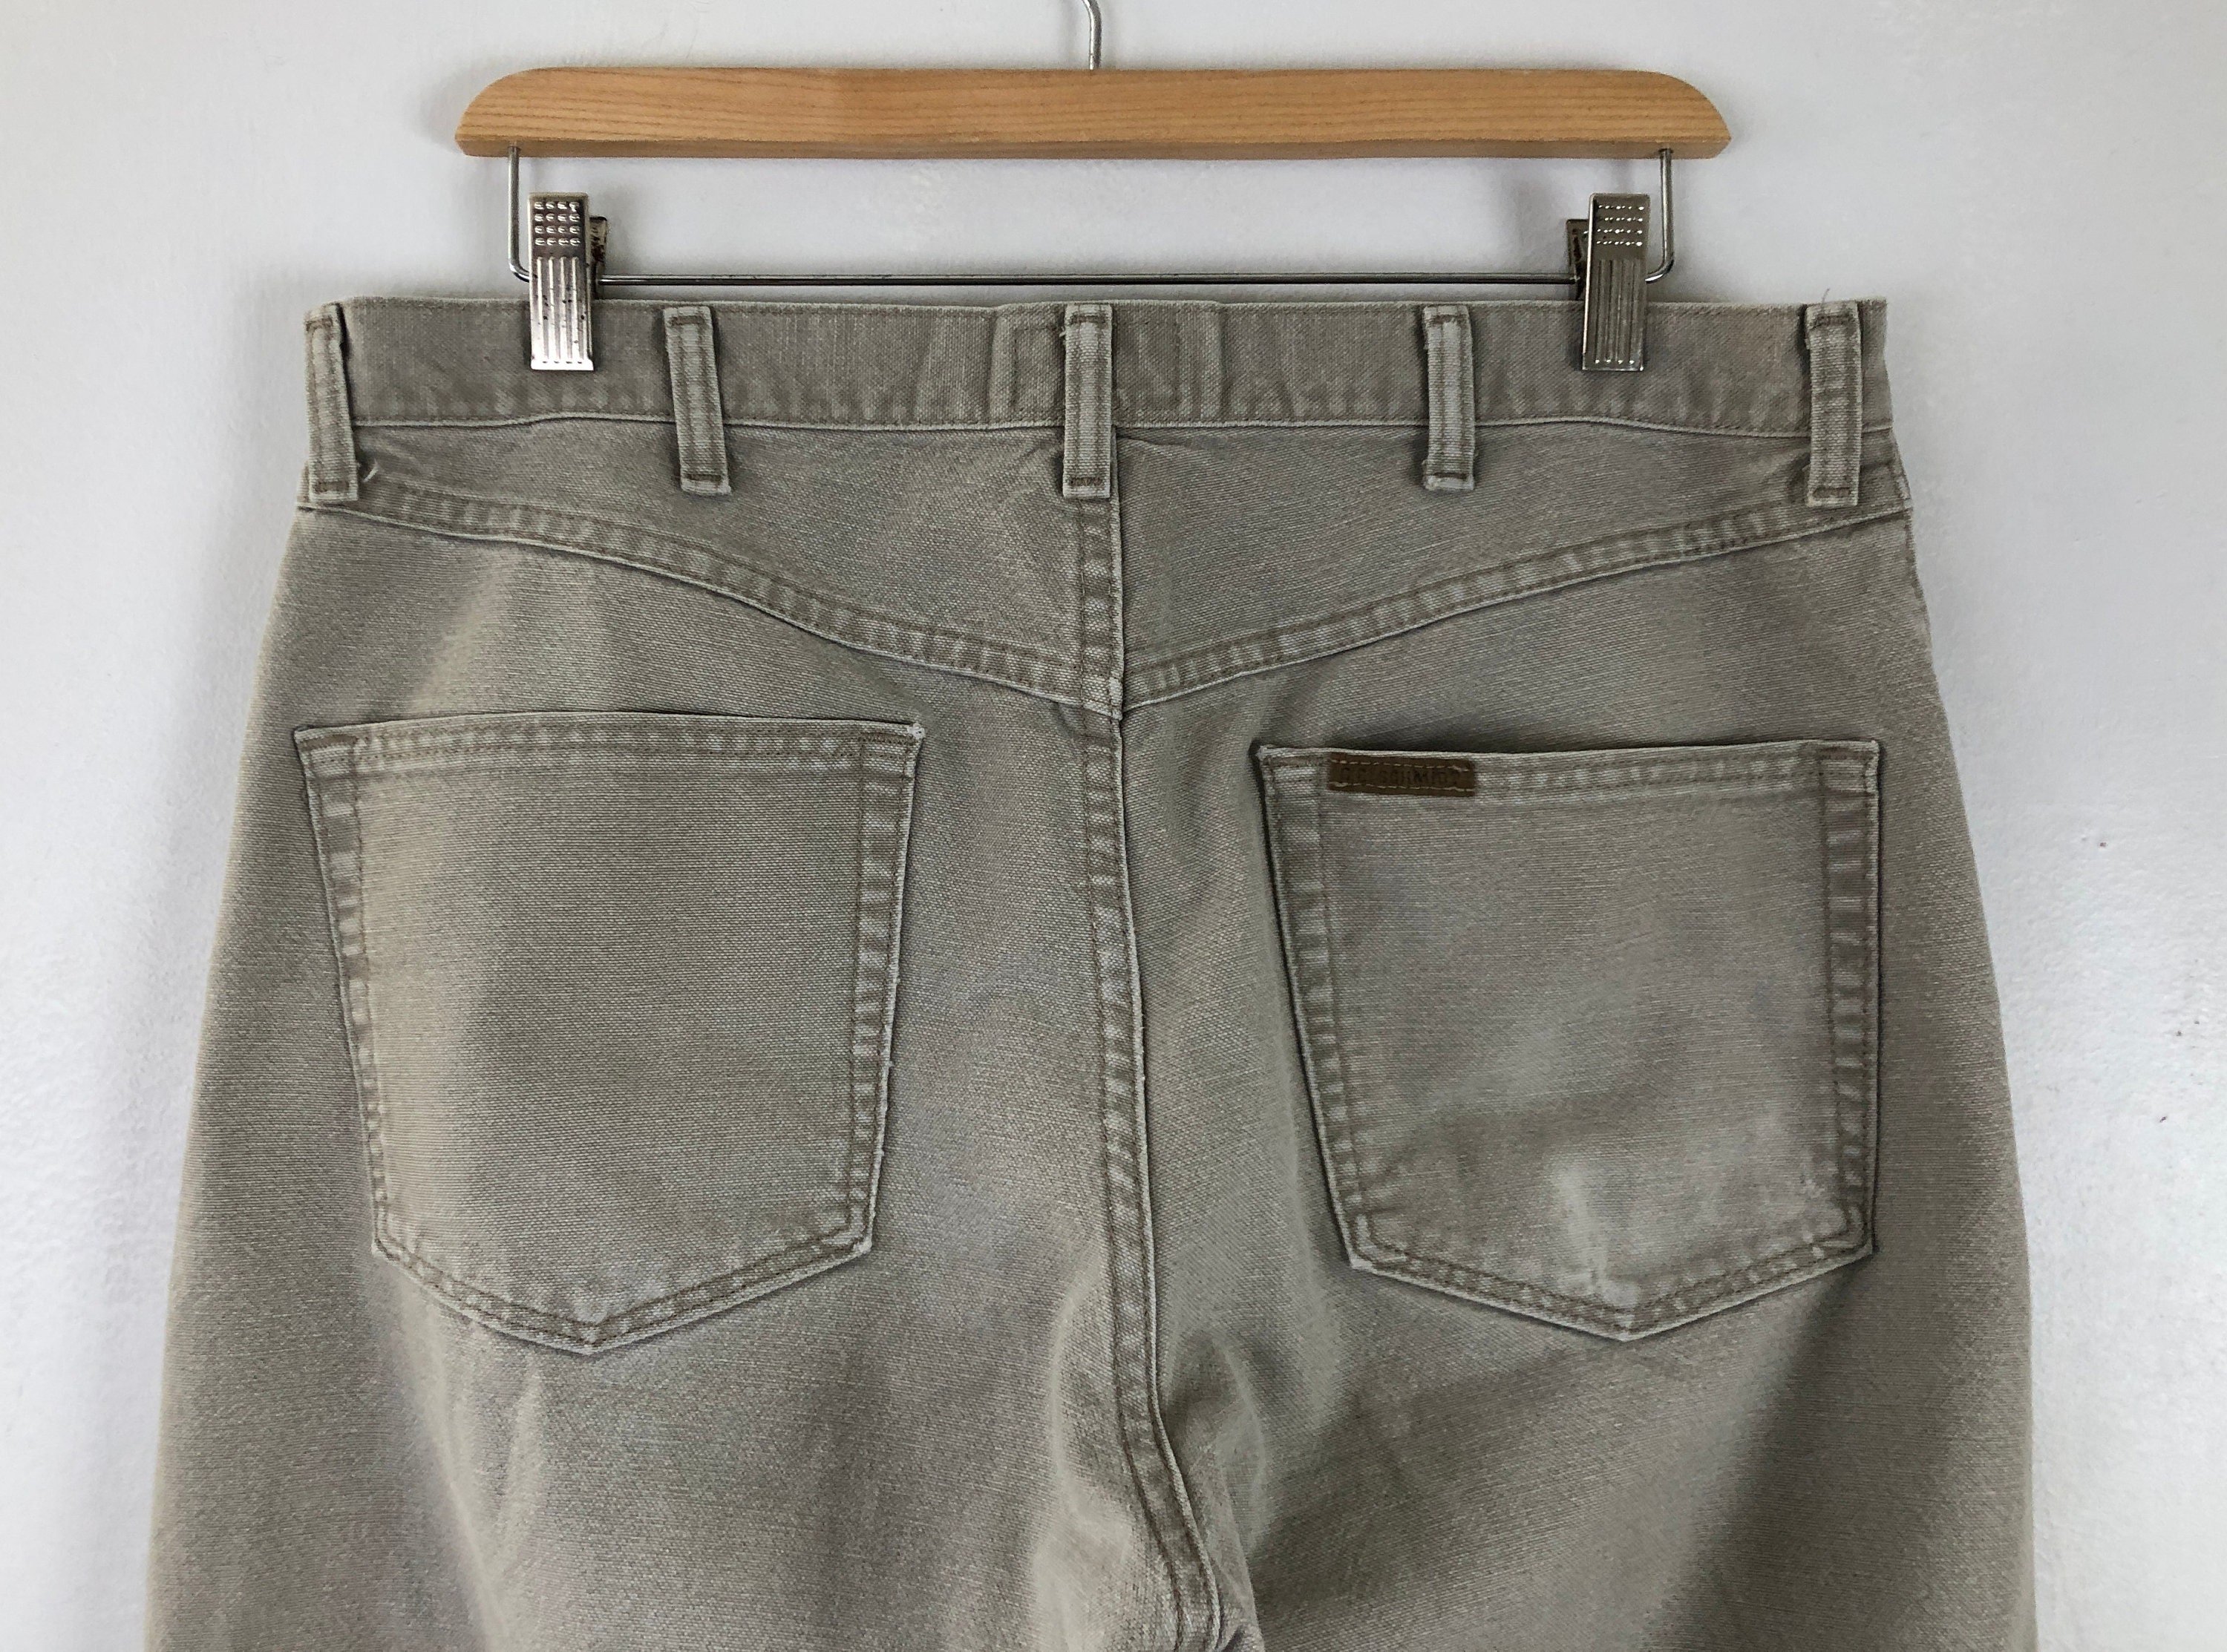 Vintage Mens Workwear Jeans 90s Taupe Beige Worn in Cotton | Etsy